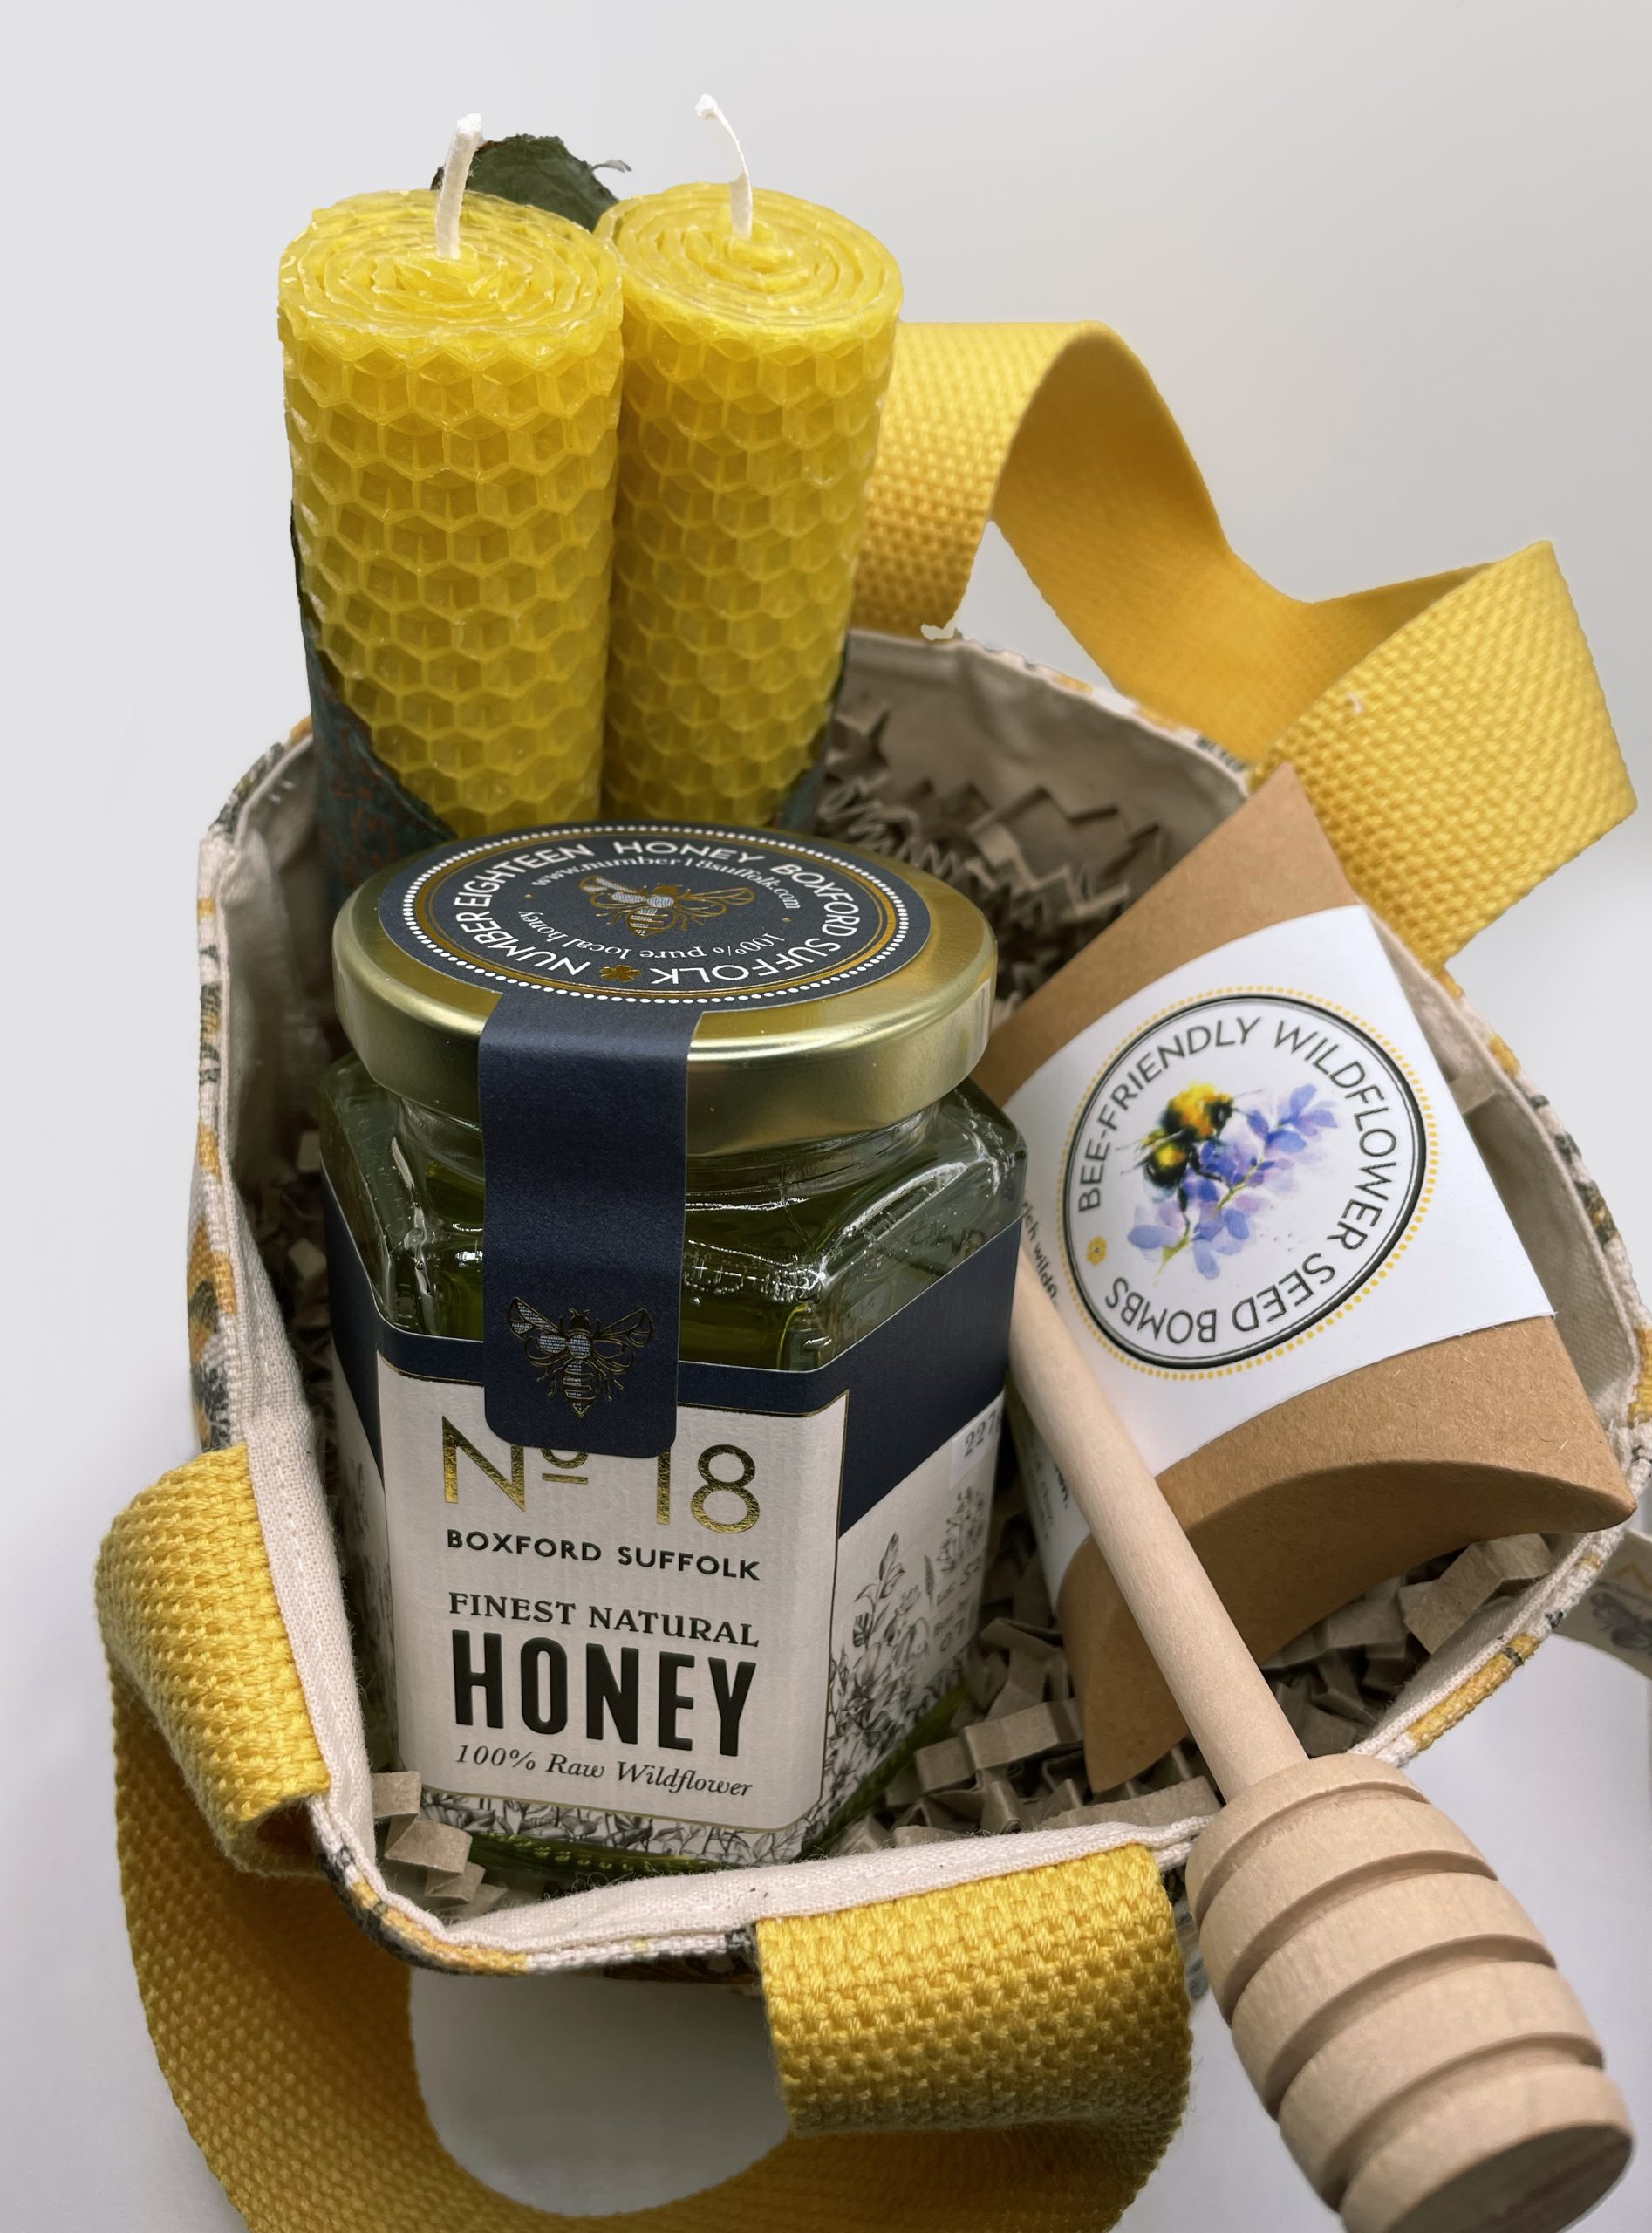 Bee Lovers Gift Basket